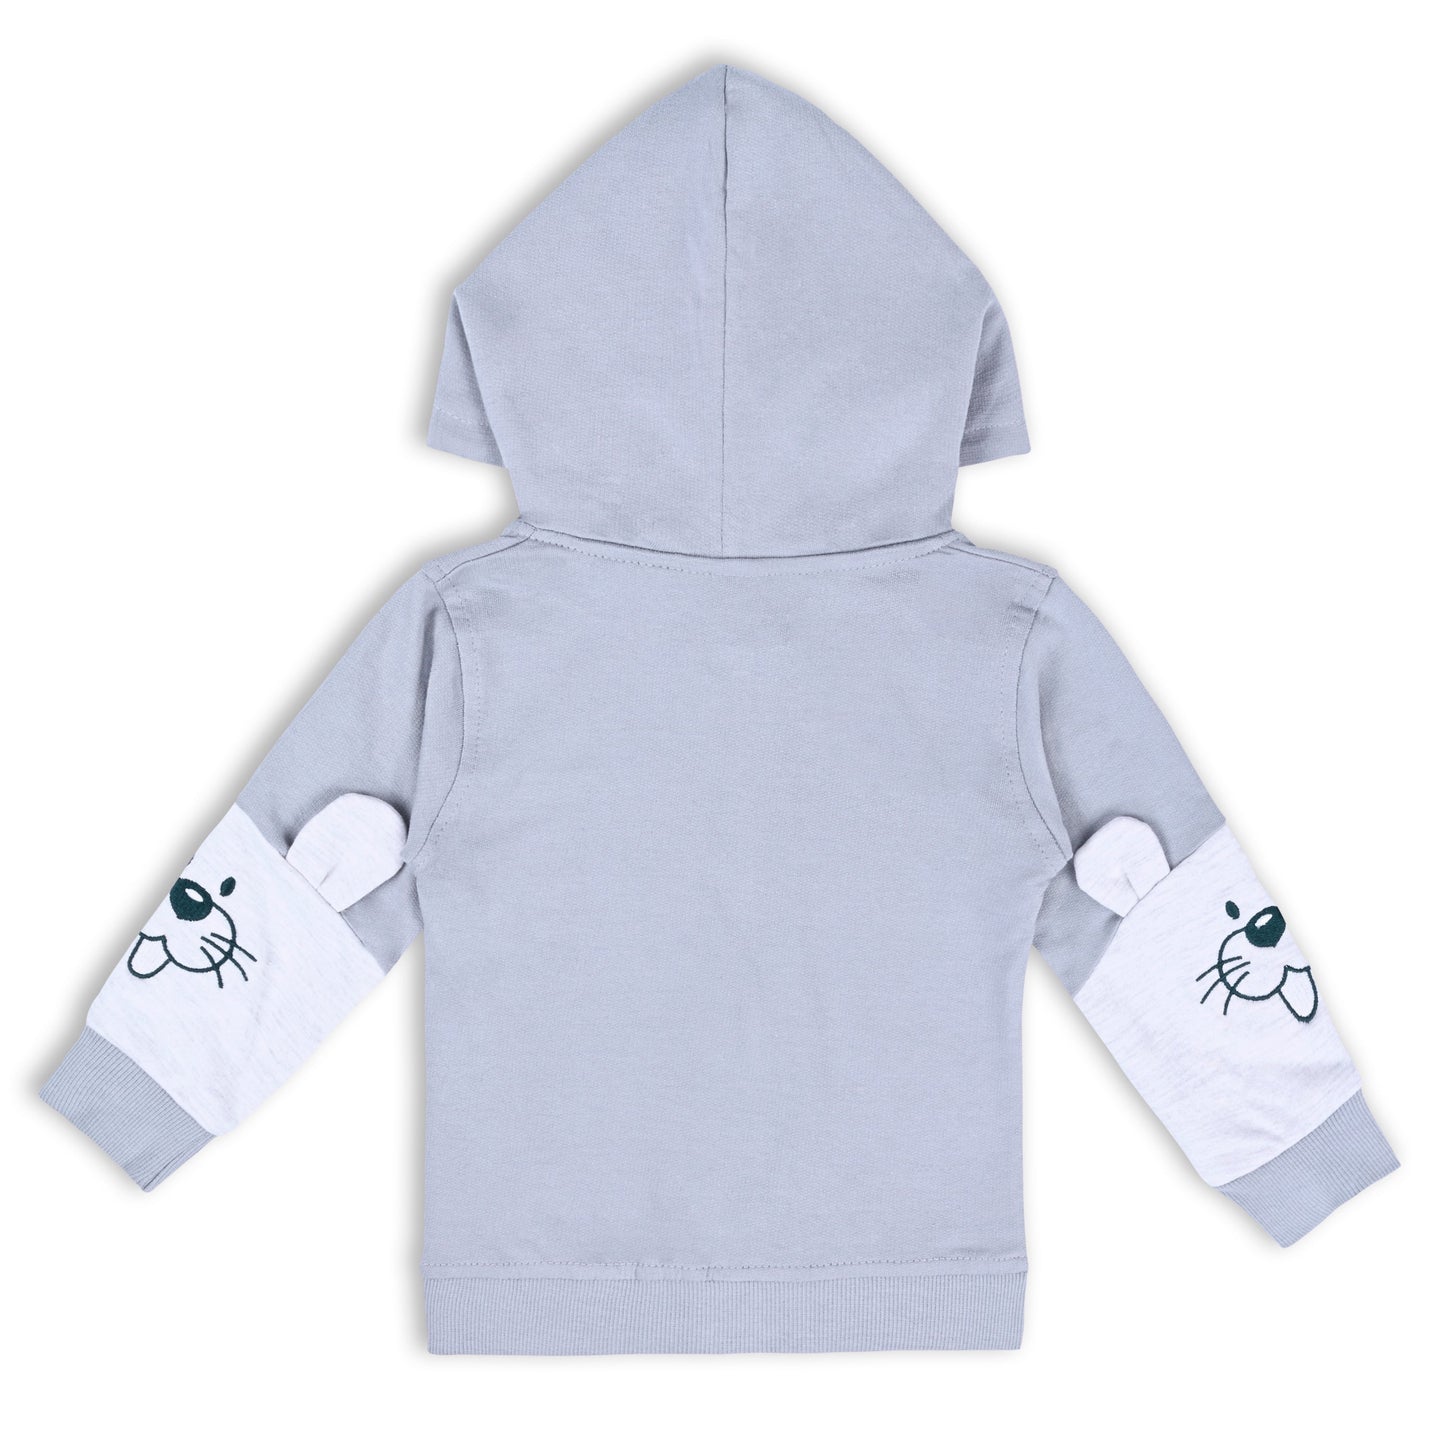 Wishkaro Unisex Cotton Applique Full Sleeve Hooded Sweatshirt-T301gry